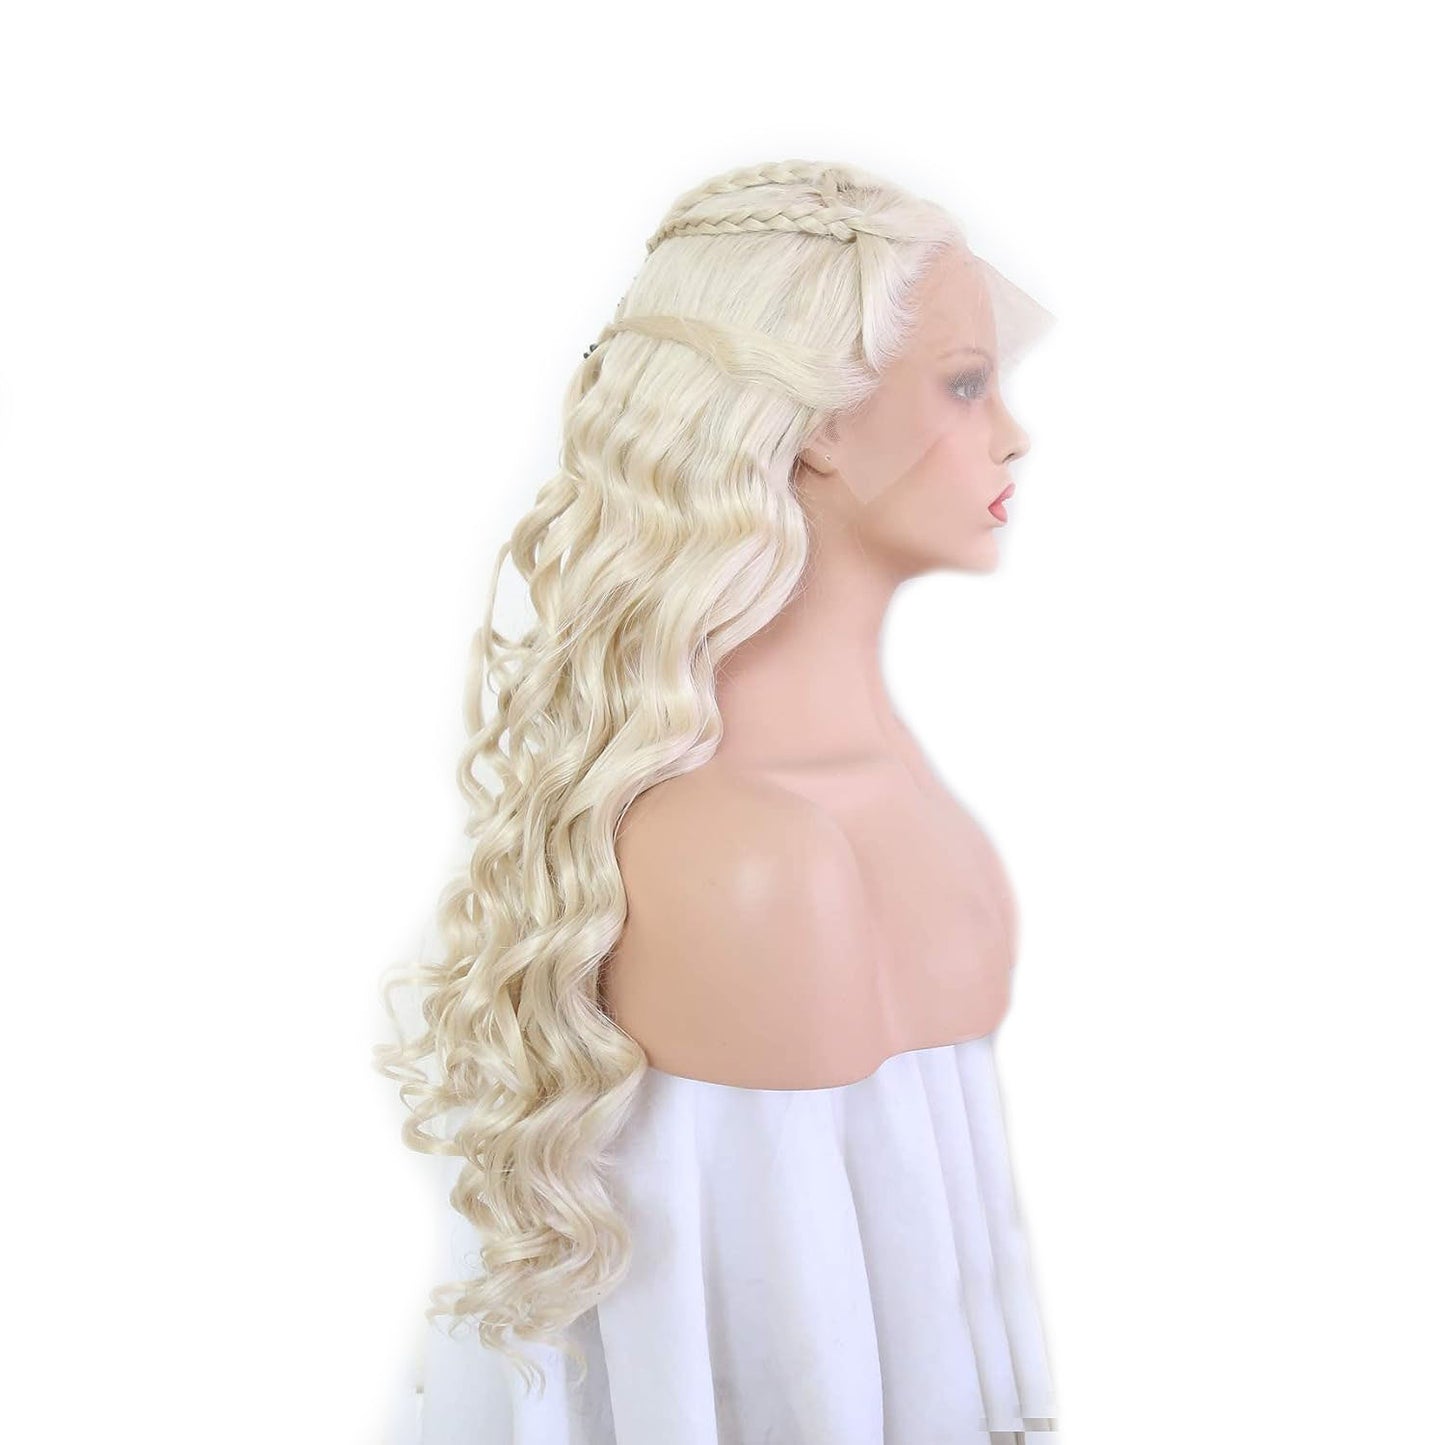 Transform with Luna Lovegood & Daenerys Targaryen: Realistic Long Hair Wig Lace Front by Morojowig